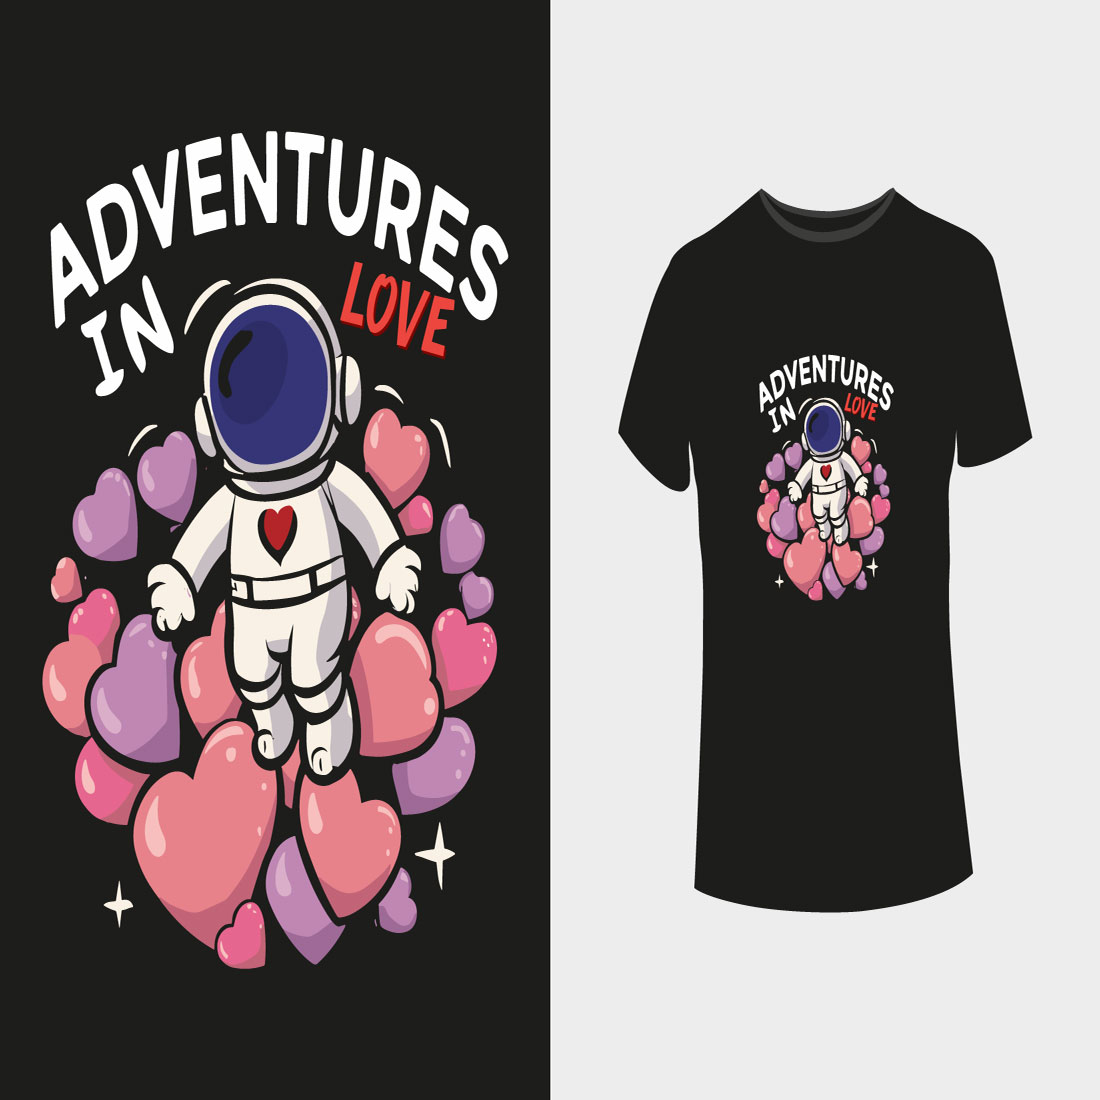 Astronaut adventures valentines - 3 tshirt preview image.